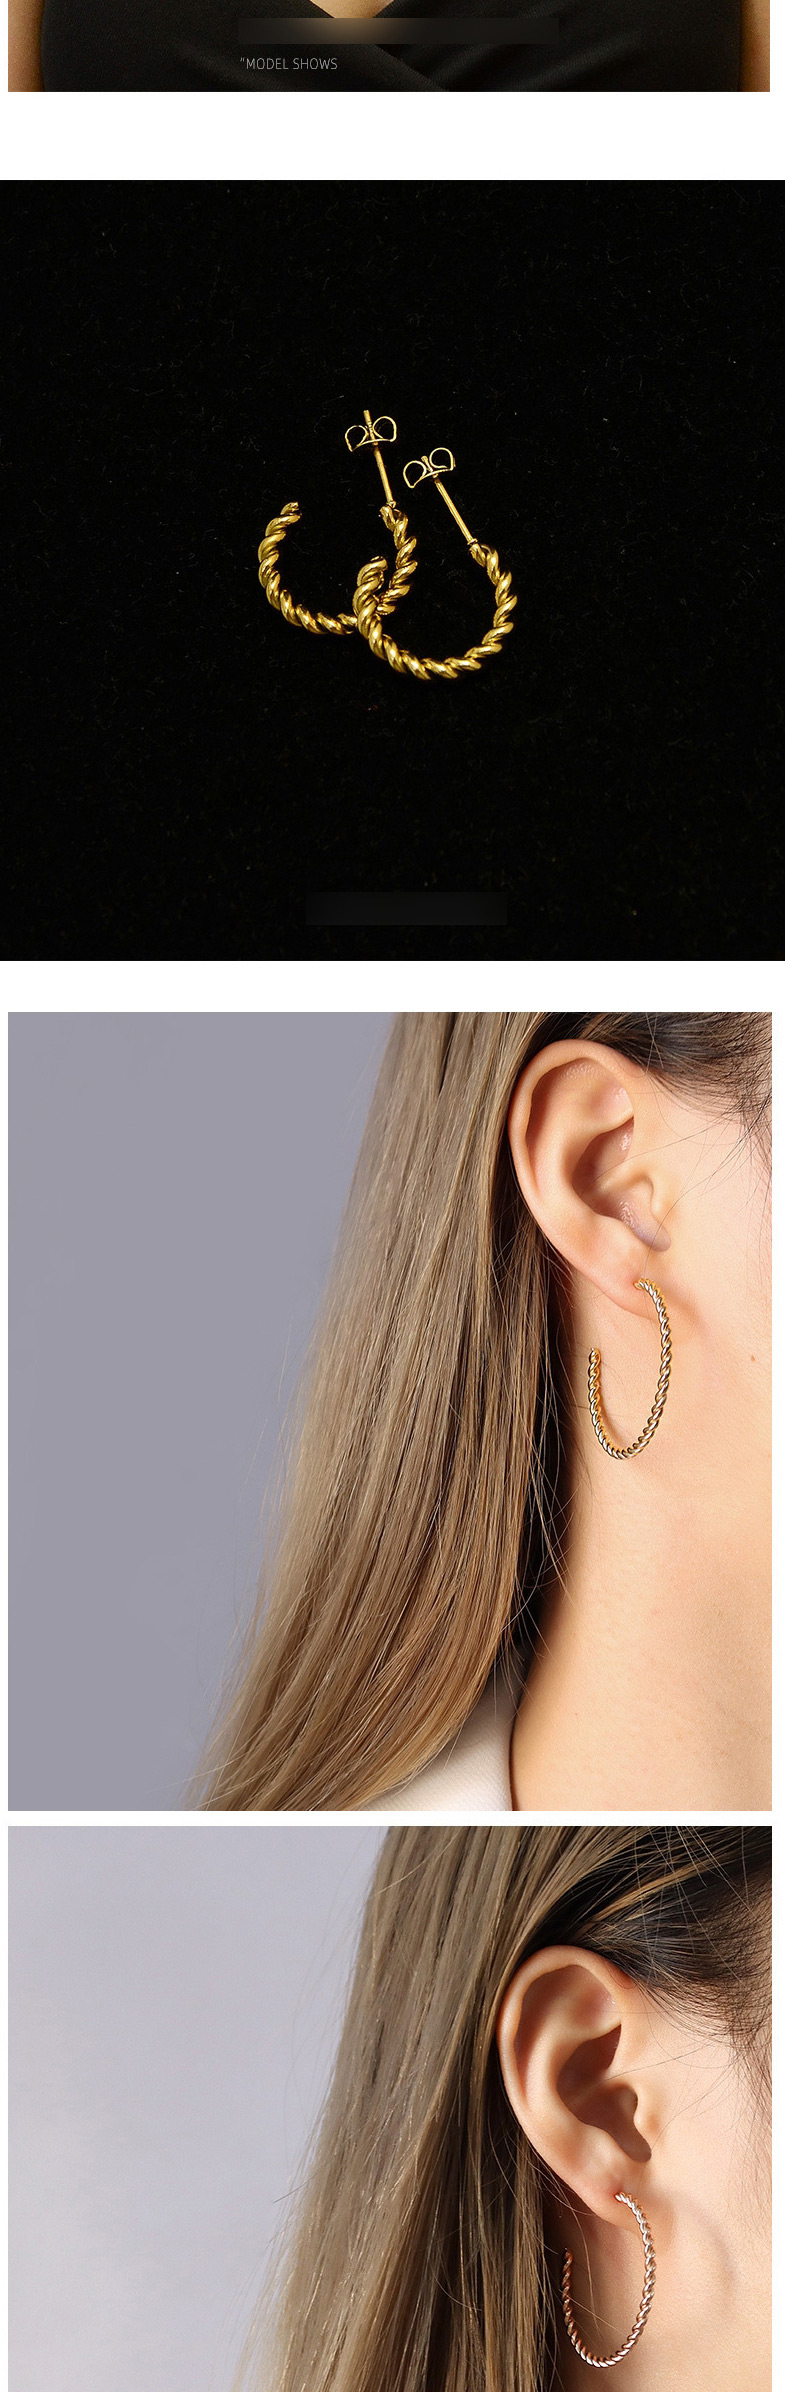 Fashion Pair Of Large Gold Color Earrings Titanium Steel Twist C-shaped Earrings,Earrings